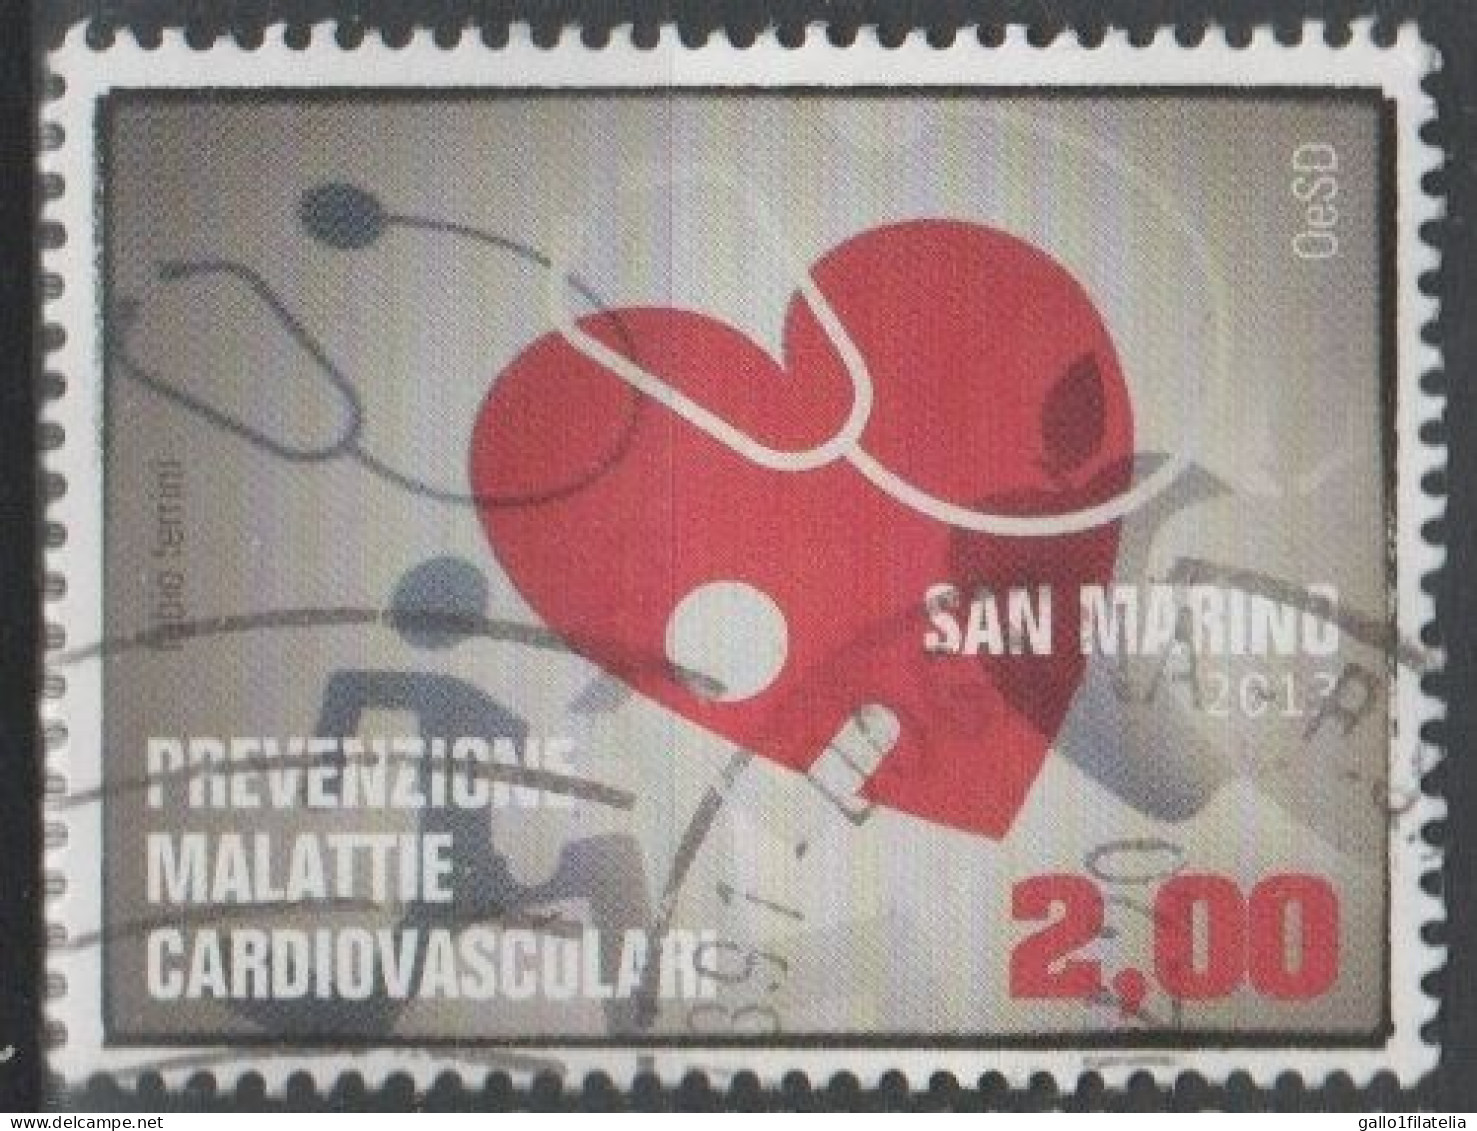 2013 - SAN MARINO - PREVENZIONE MALATTIE CARDIOVASCOLARI / PREVENTION OF CARDIOVASCULAR DISEASES. USATO - Gebruikt